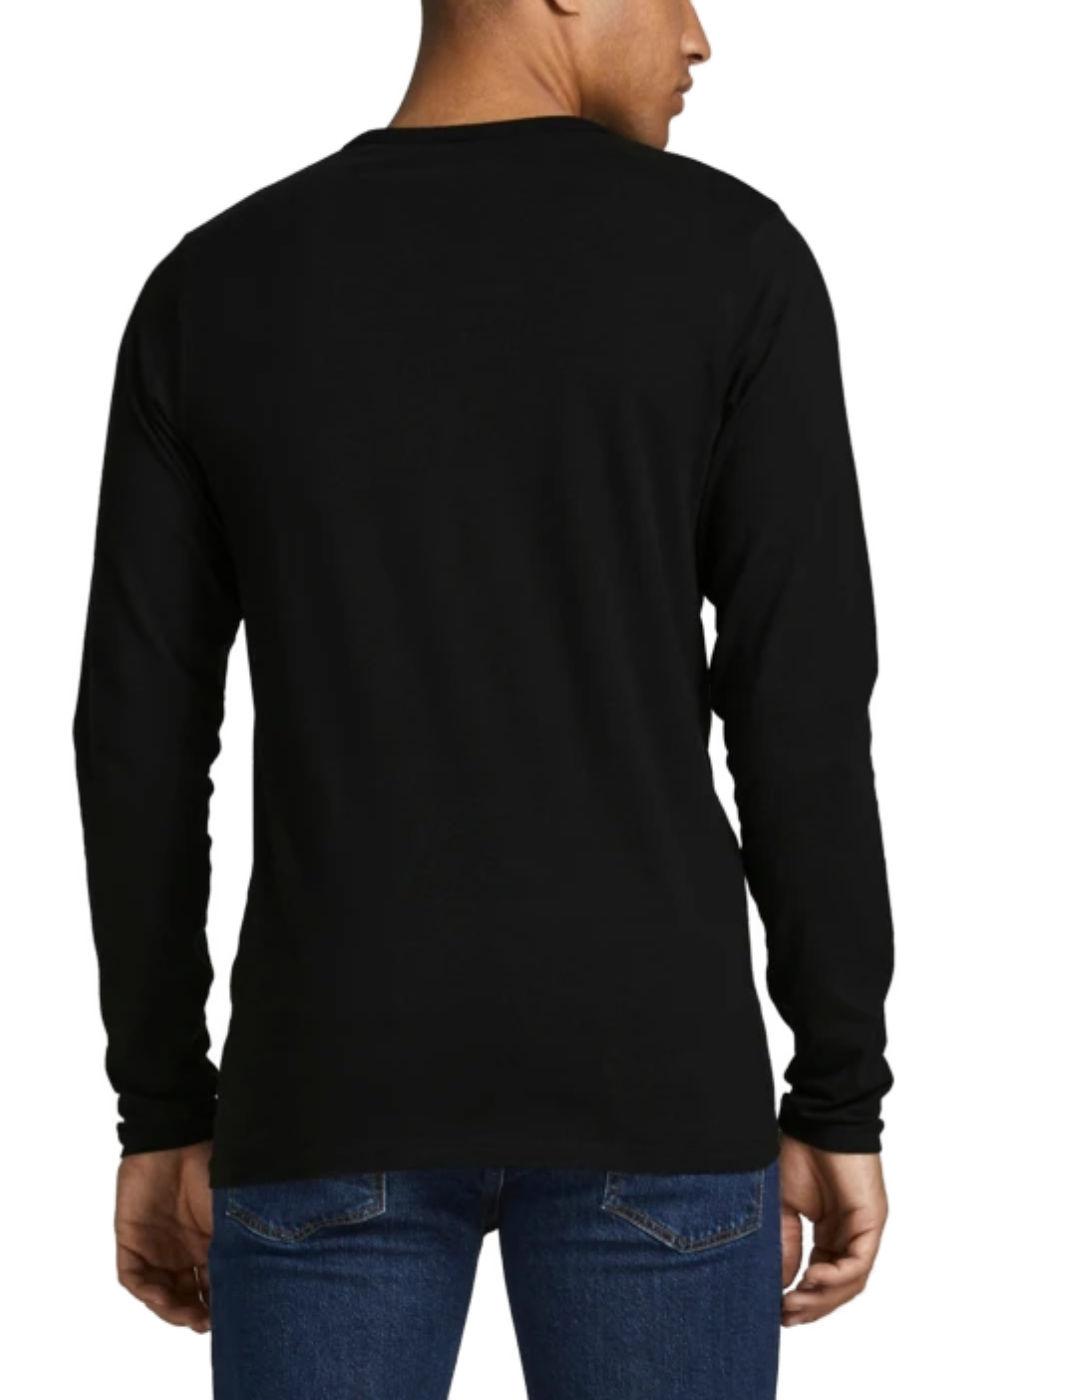 Camiseta Jack&jones Basic negro manga larga de hombre